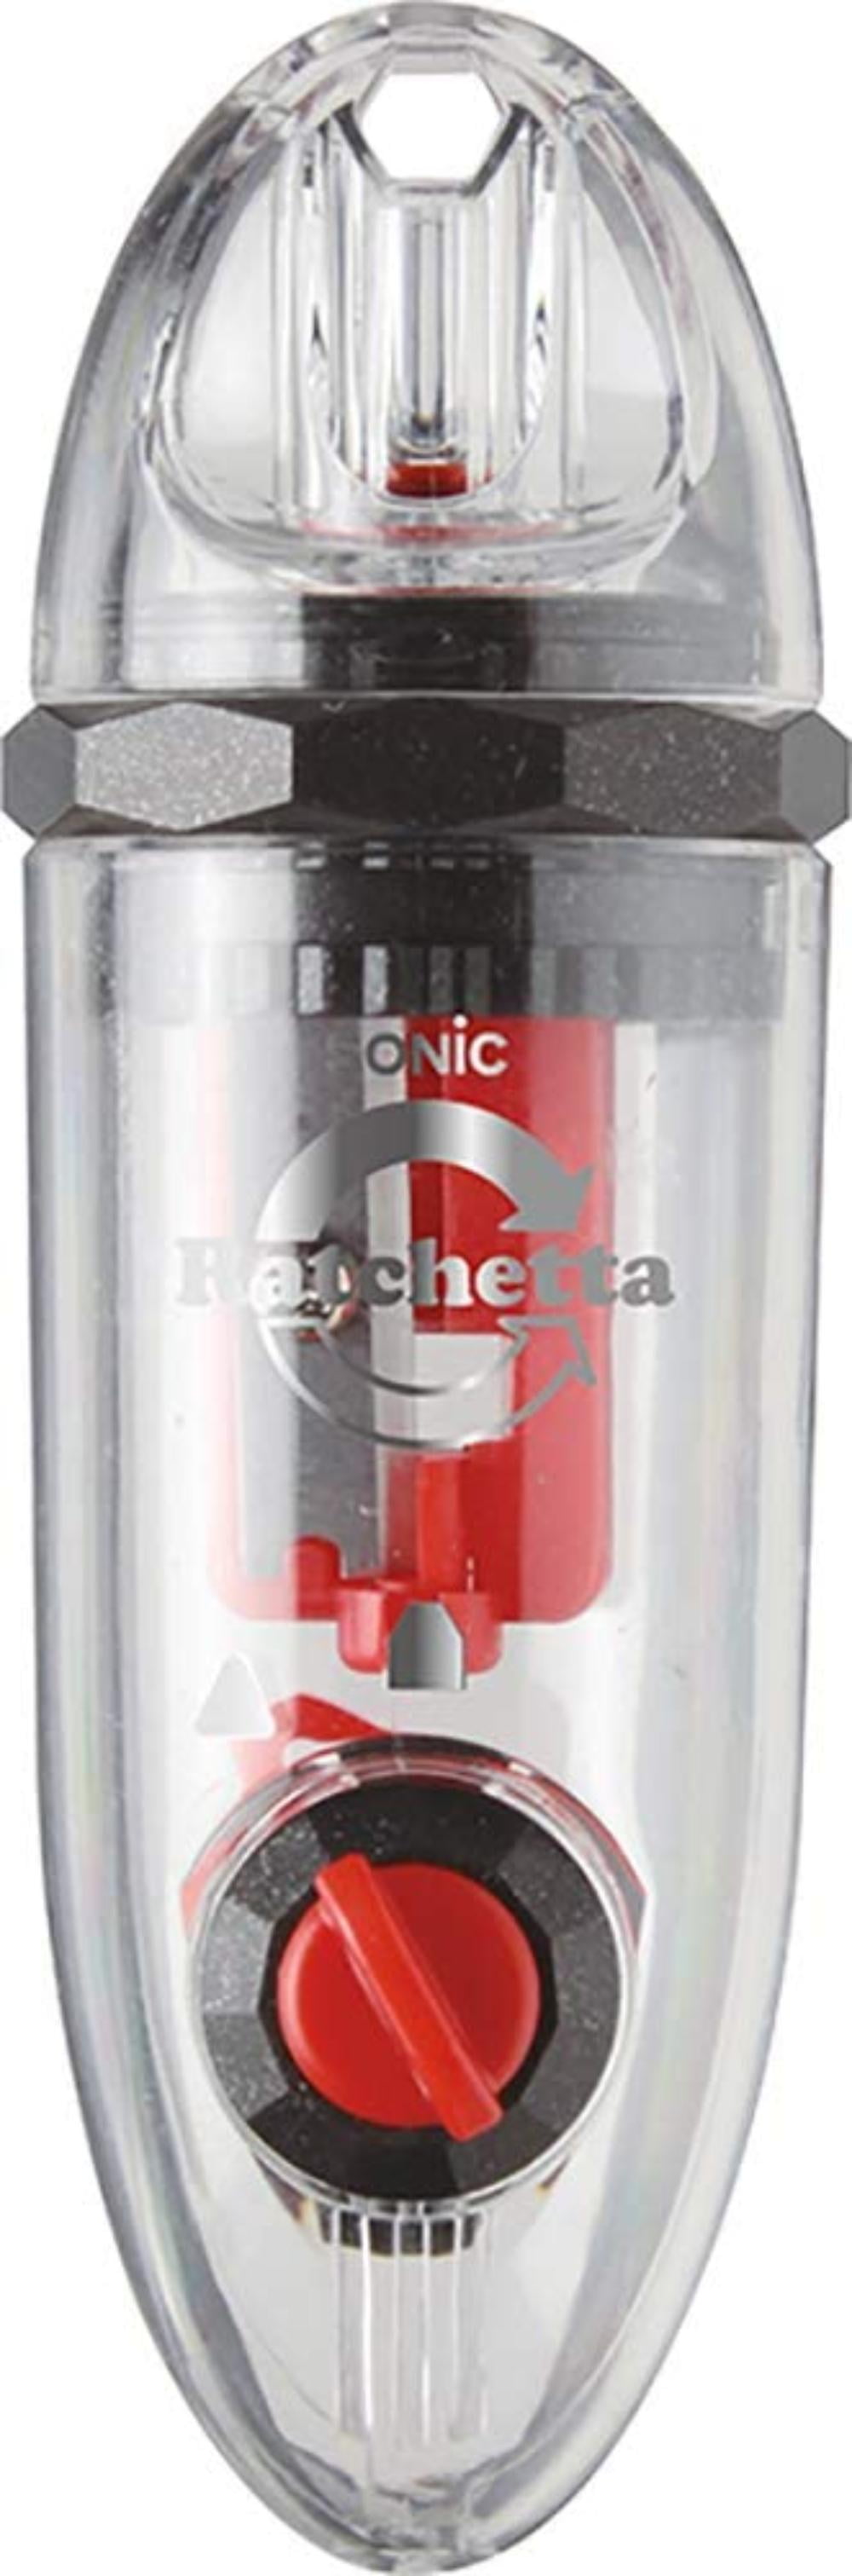 Sonic Rachetta capsule handy pencil sharpener Red SK-878-R